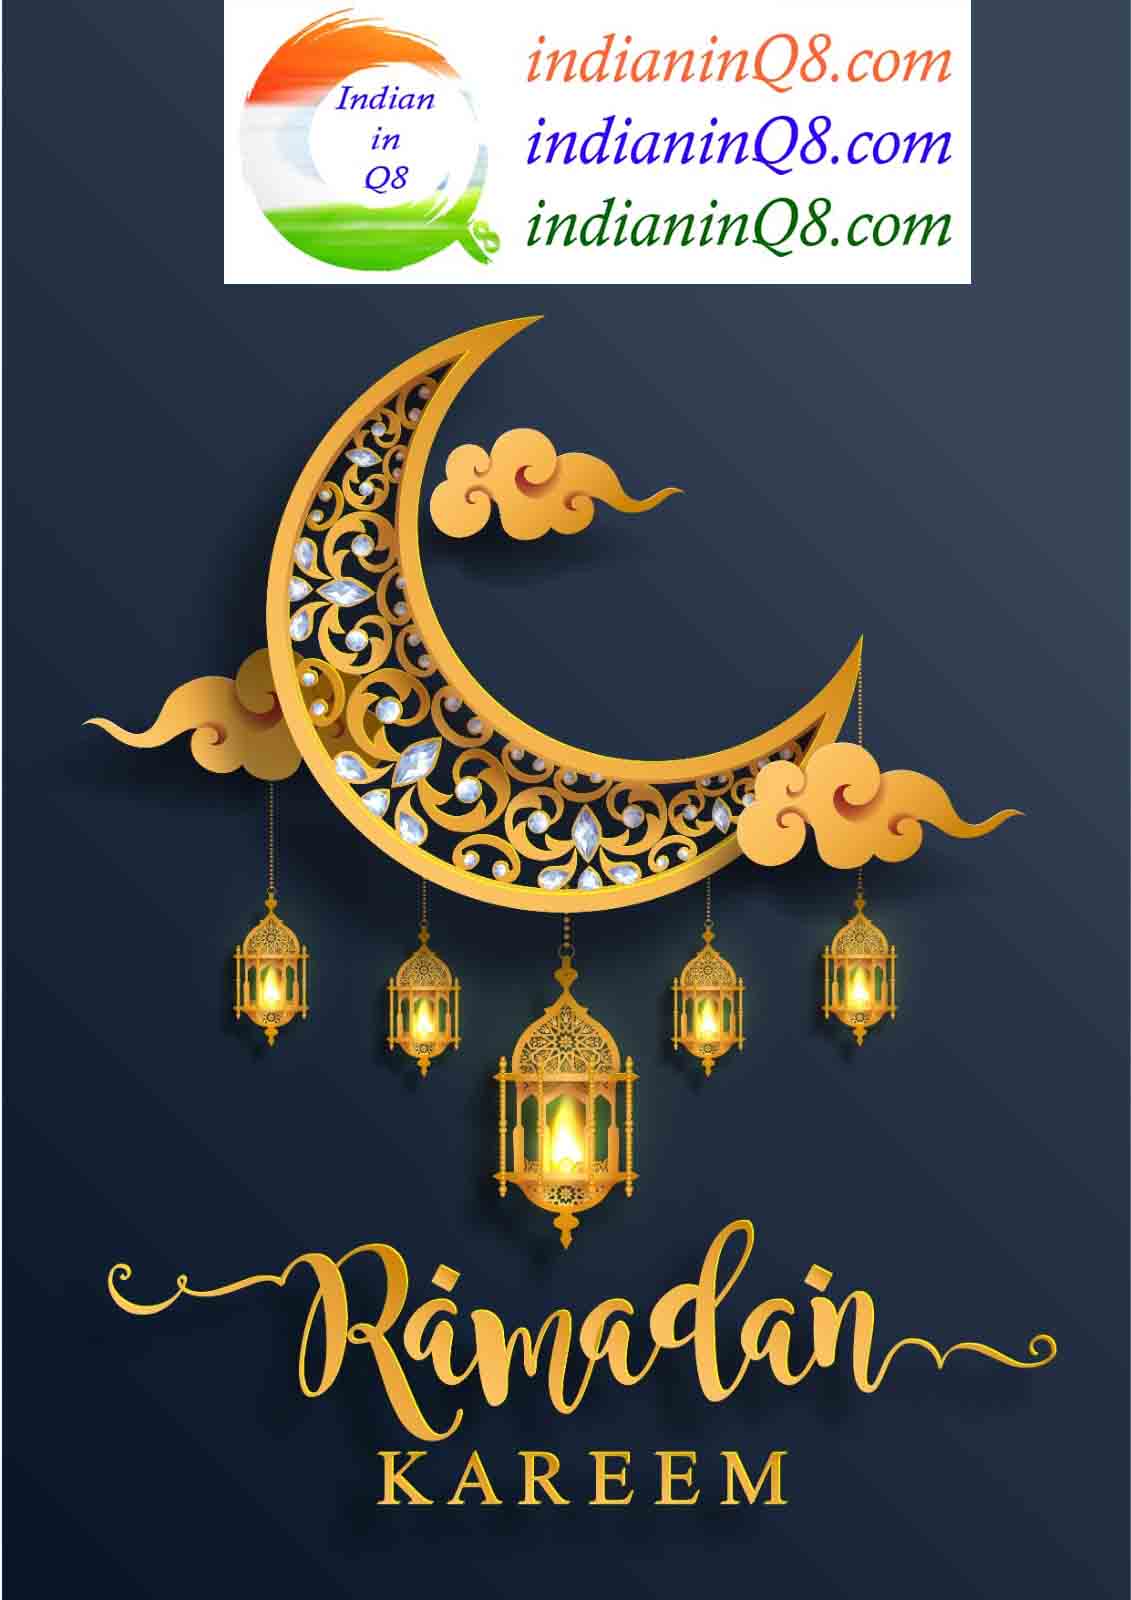 IndianinQ8.com Wish you and your family, Ramadan Mubarak 2022